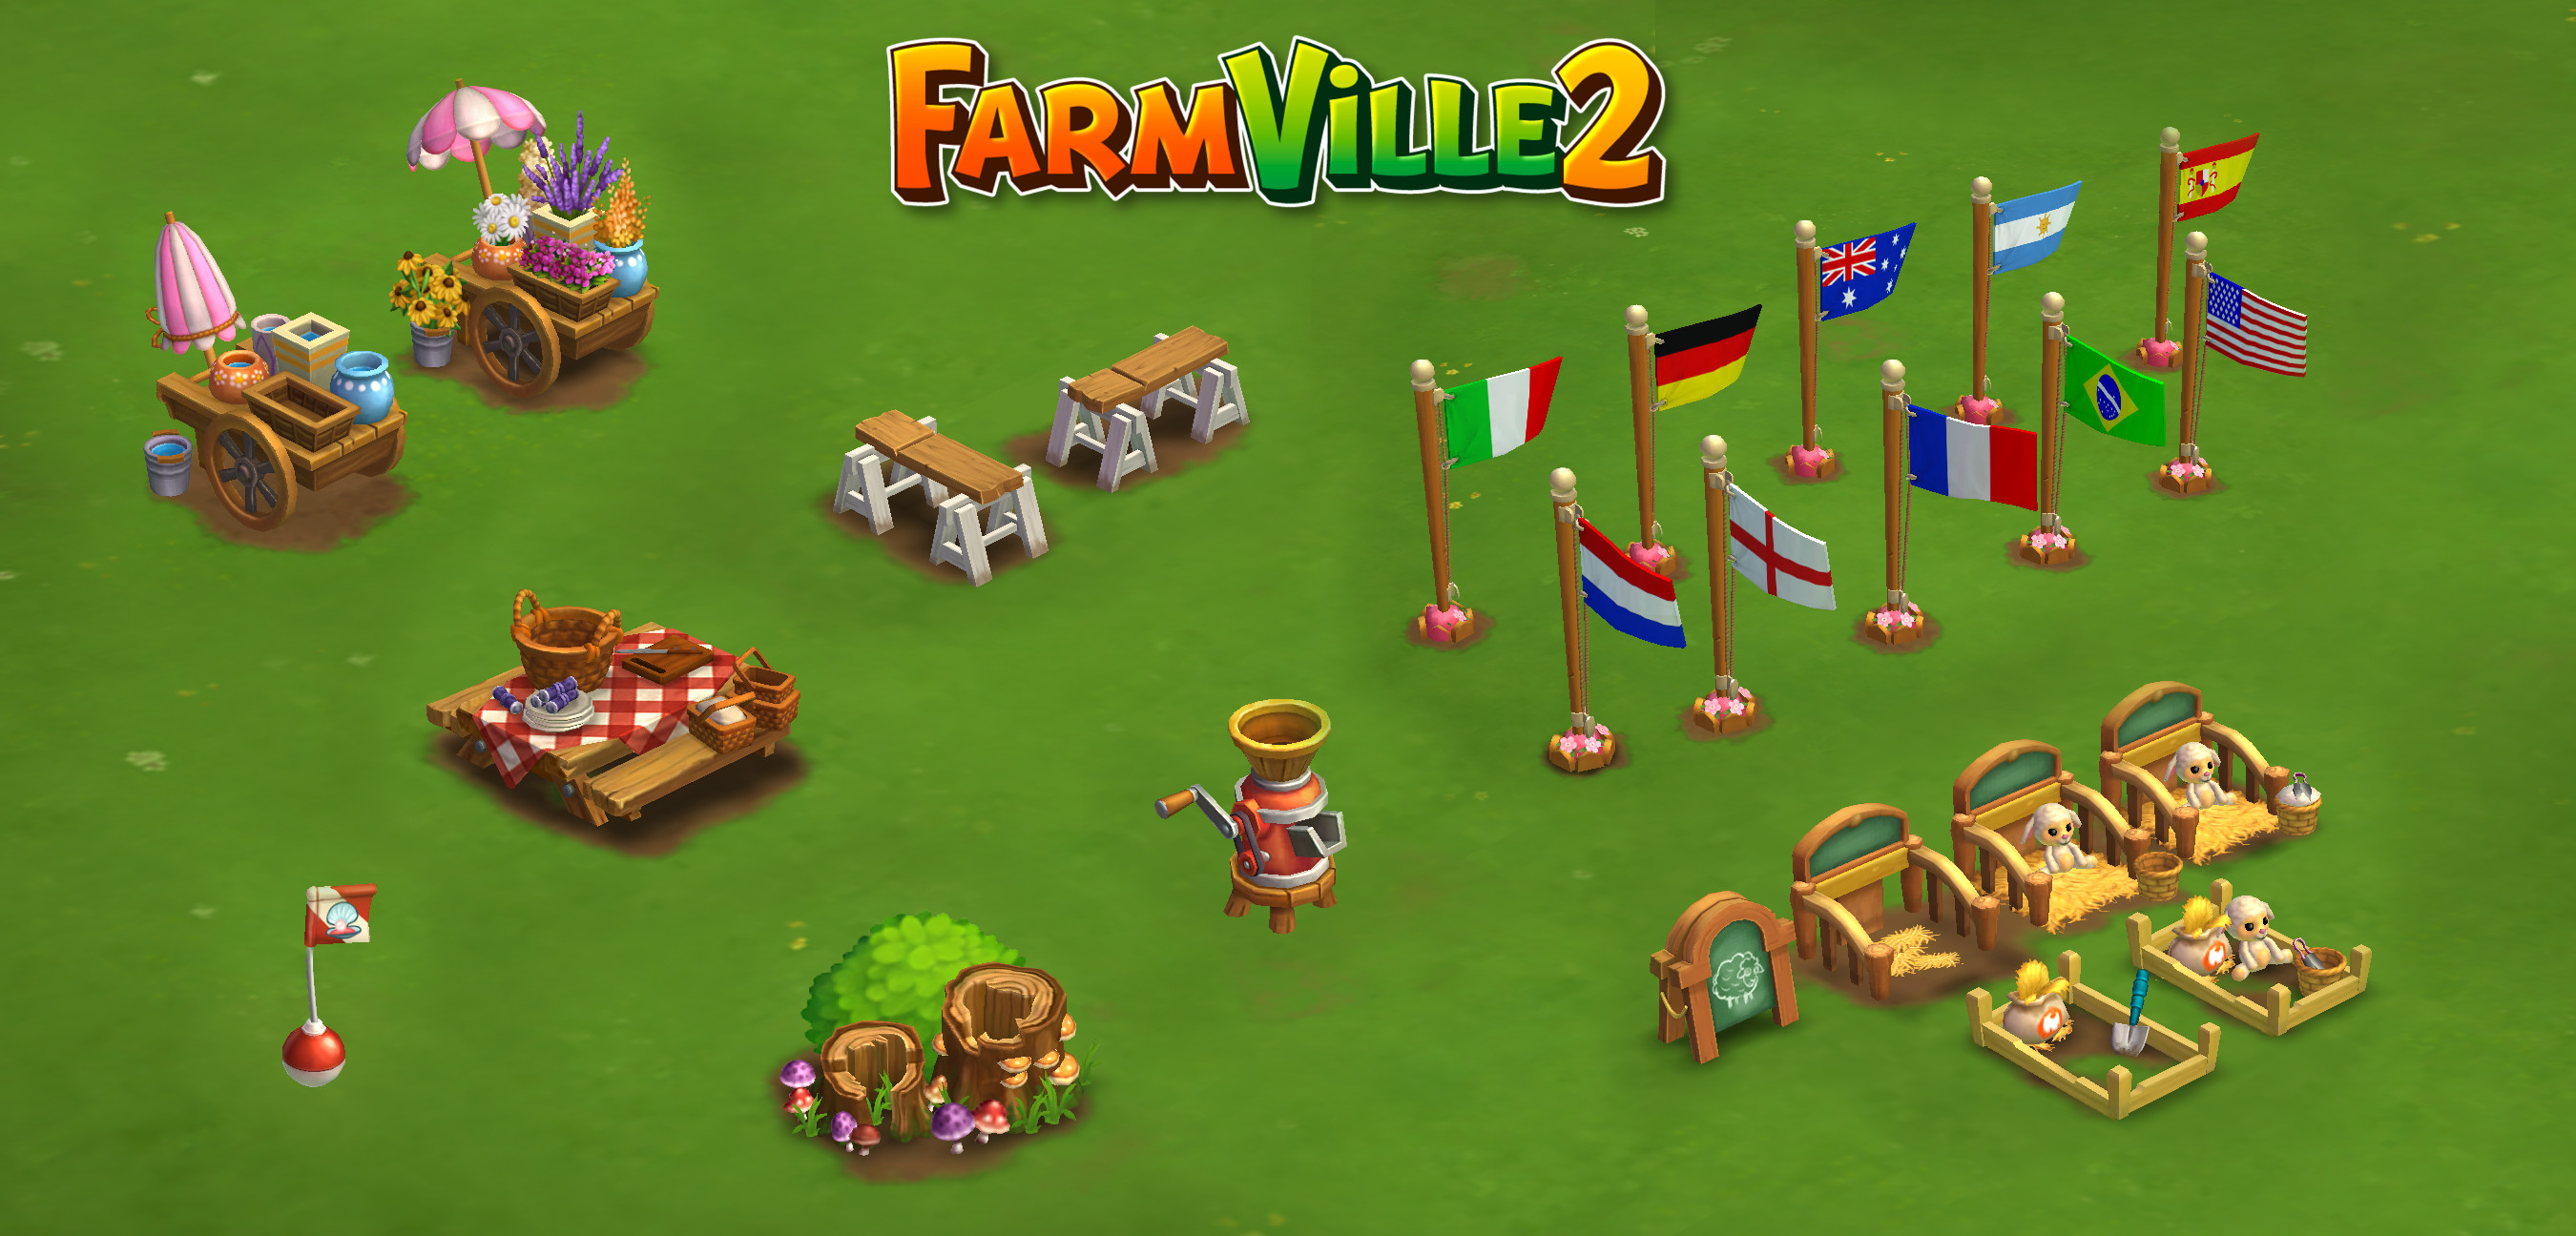 Farmville 2: Props